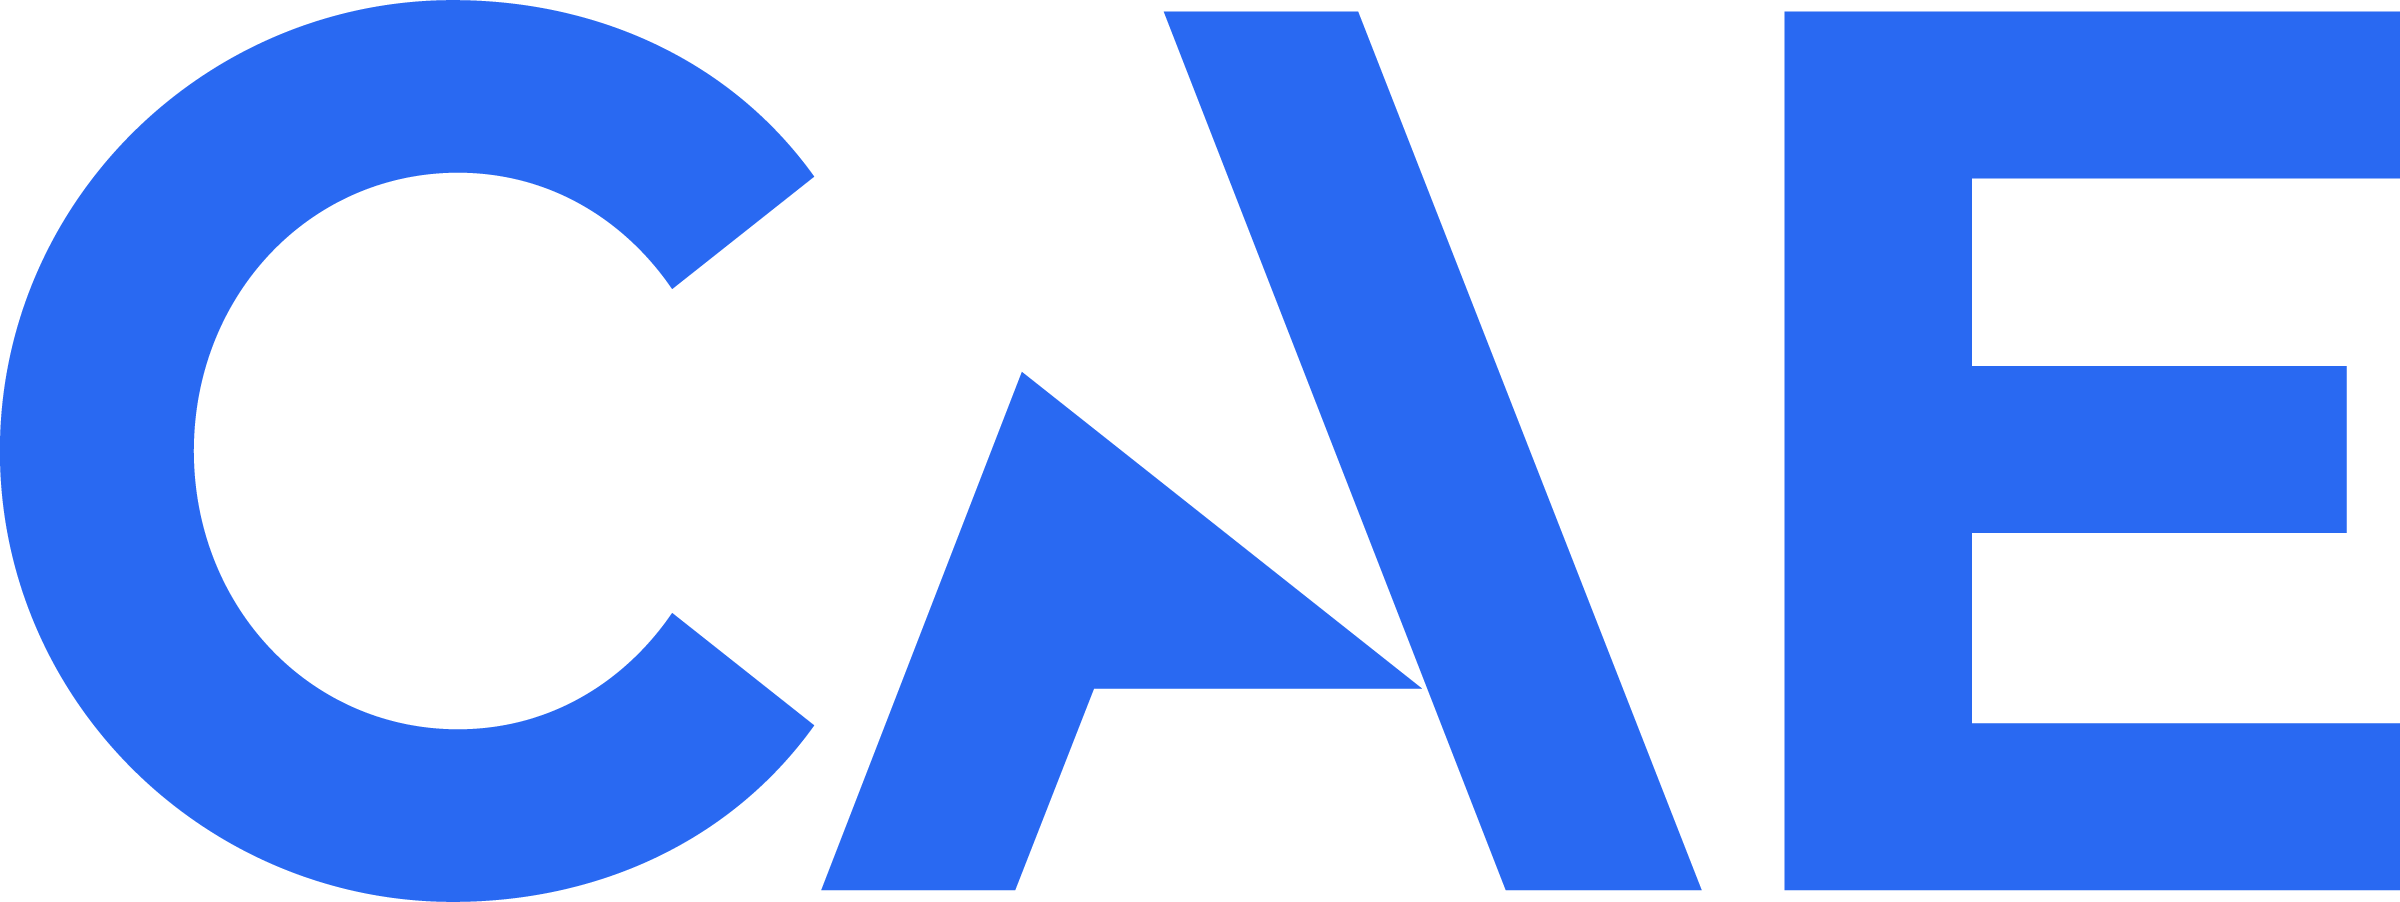 53 CAE Simuflite Inc company logo